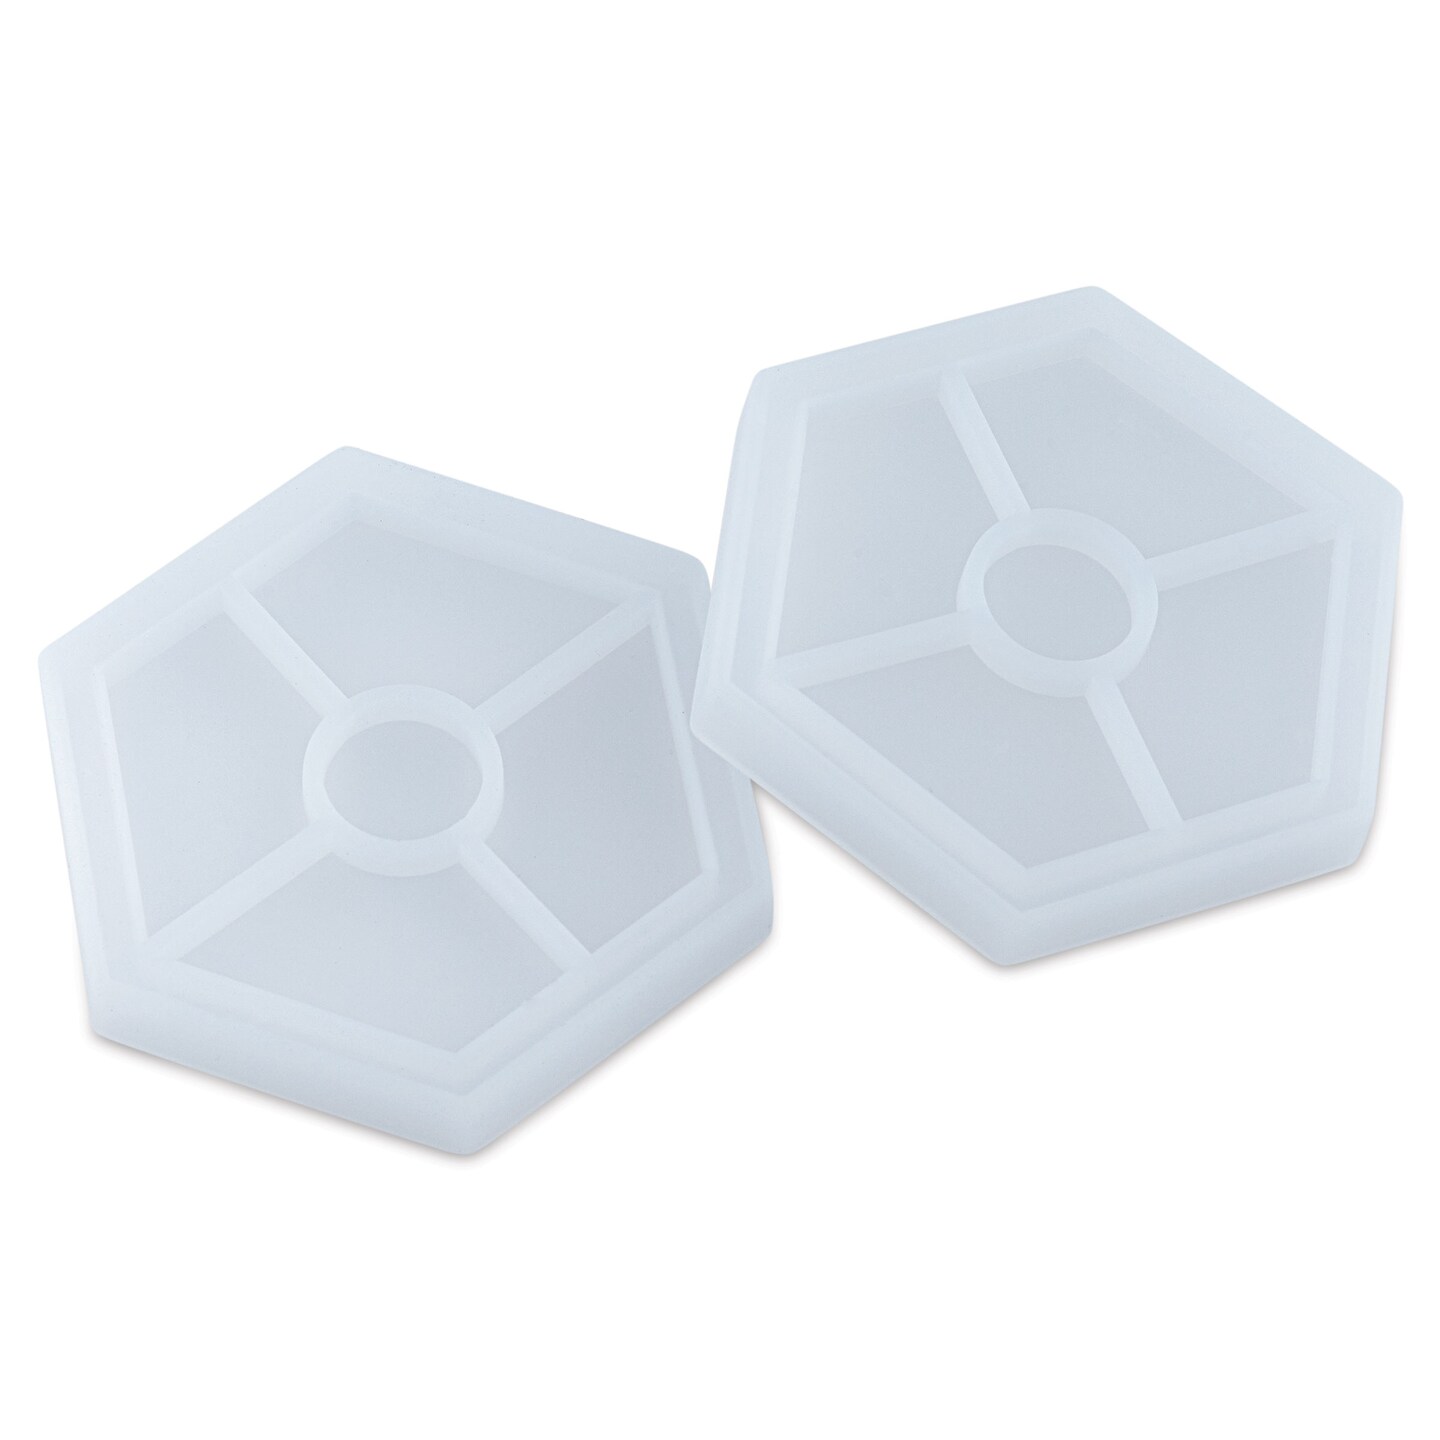 Colorberry Coaster Silicone Mold Set - Hexagon, Pkg of 2